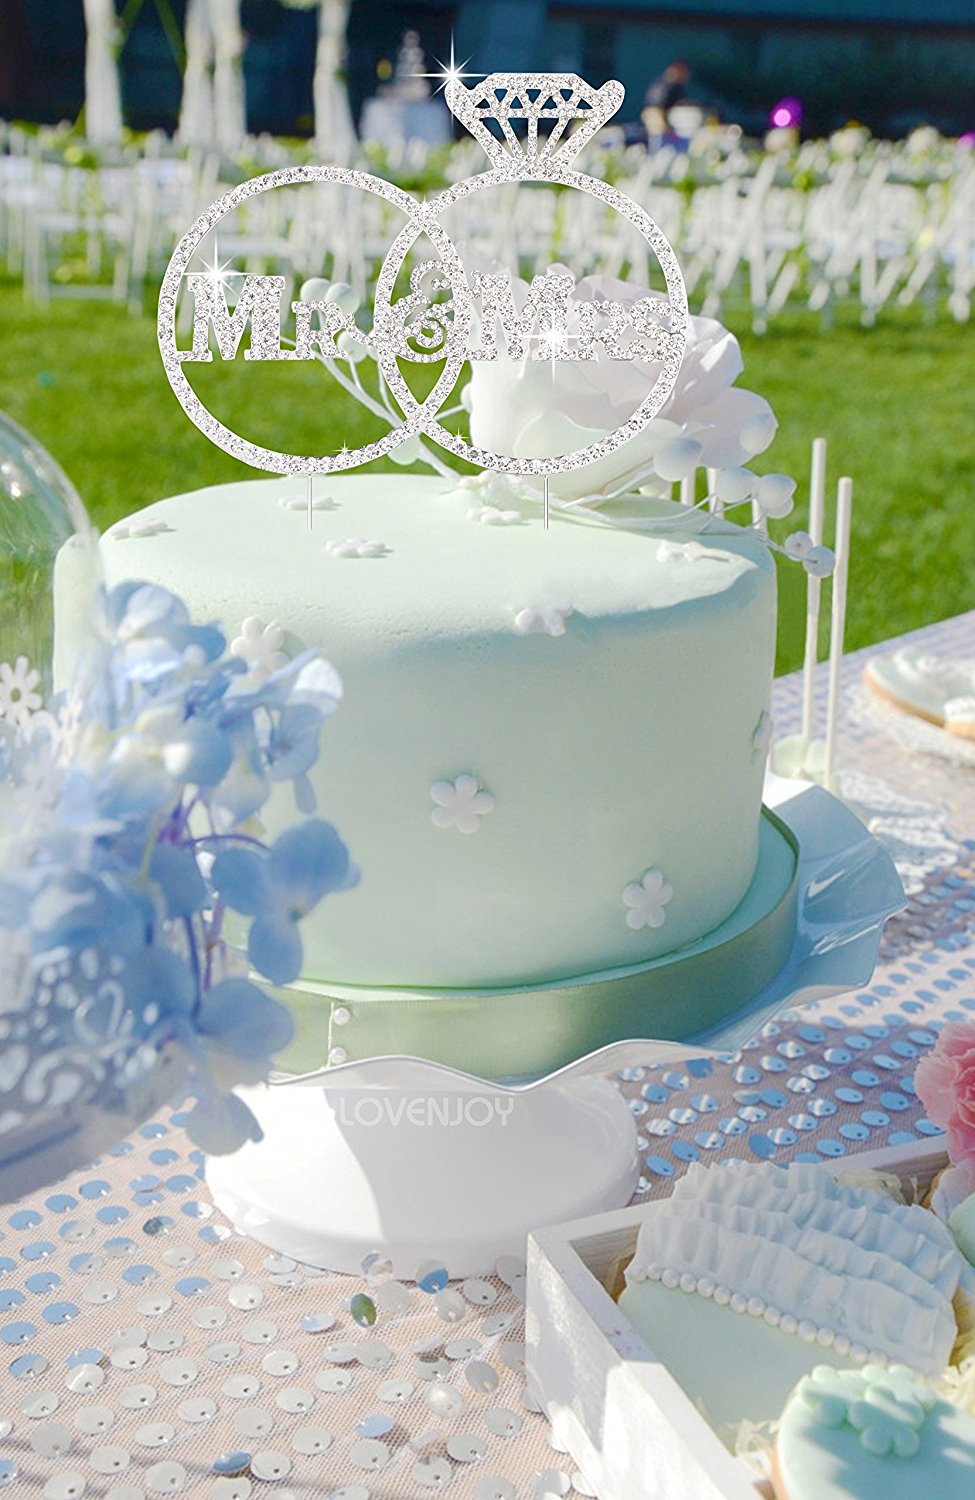 Lovenjoy With T Box Mr Mrs Diamond Ring Crystal Rhinestone Wedding Engagement Cake Topper N5 